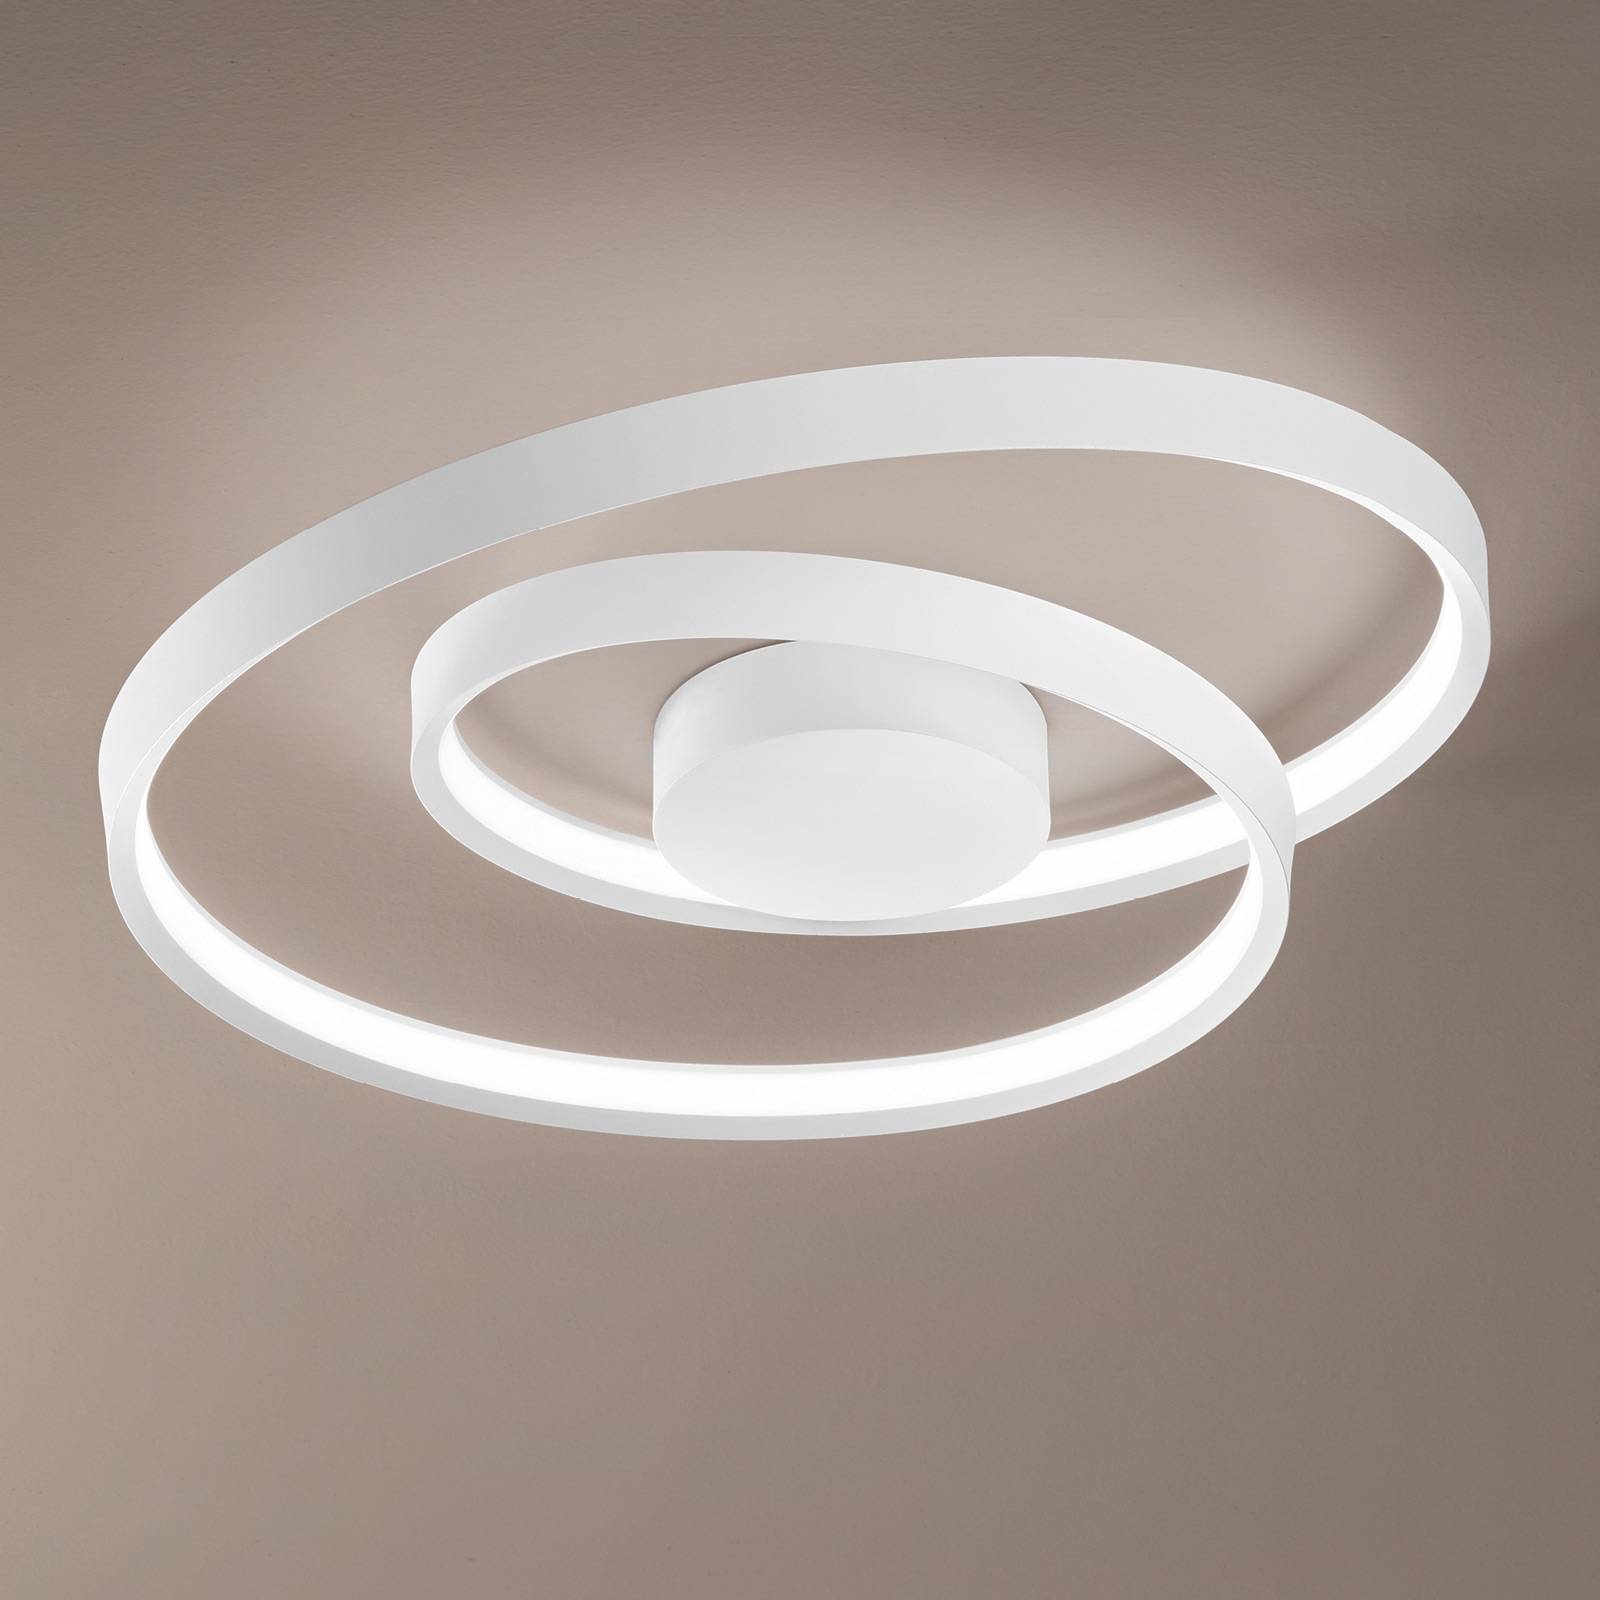 Lampa sufitowa LED Ritmo, Ø 60 cm, biała